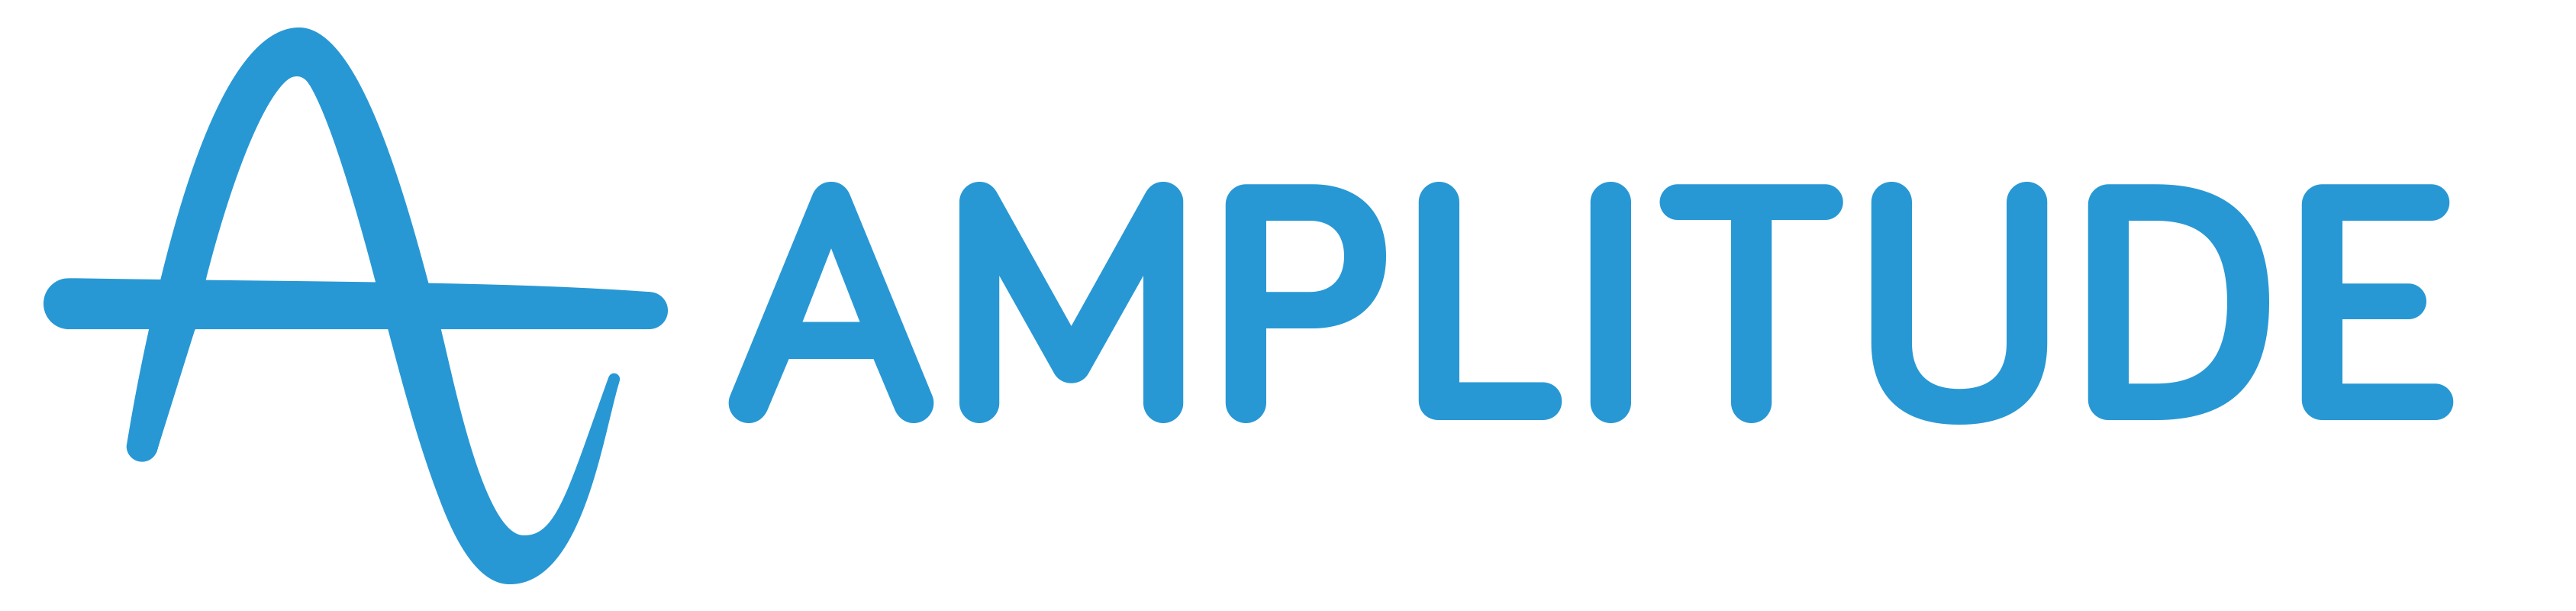 Amplitude Lands $15m Funding Round